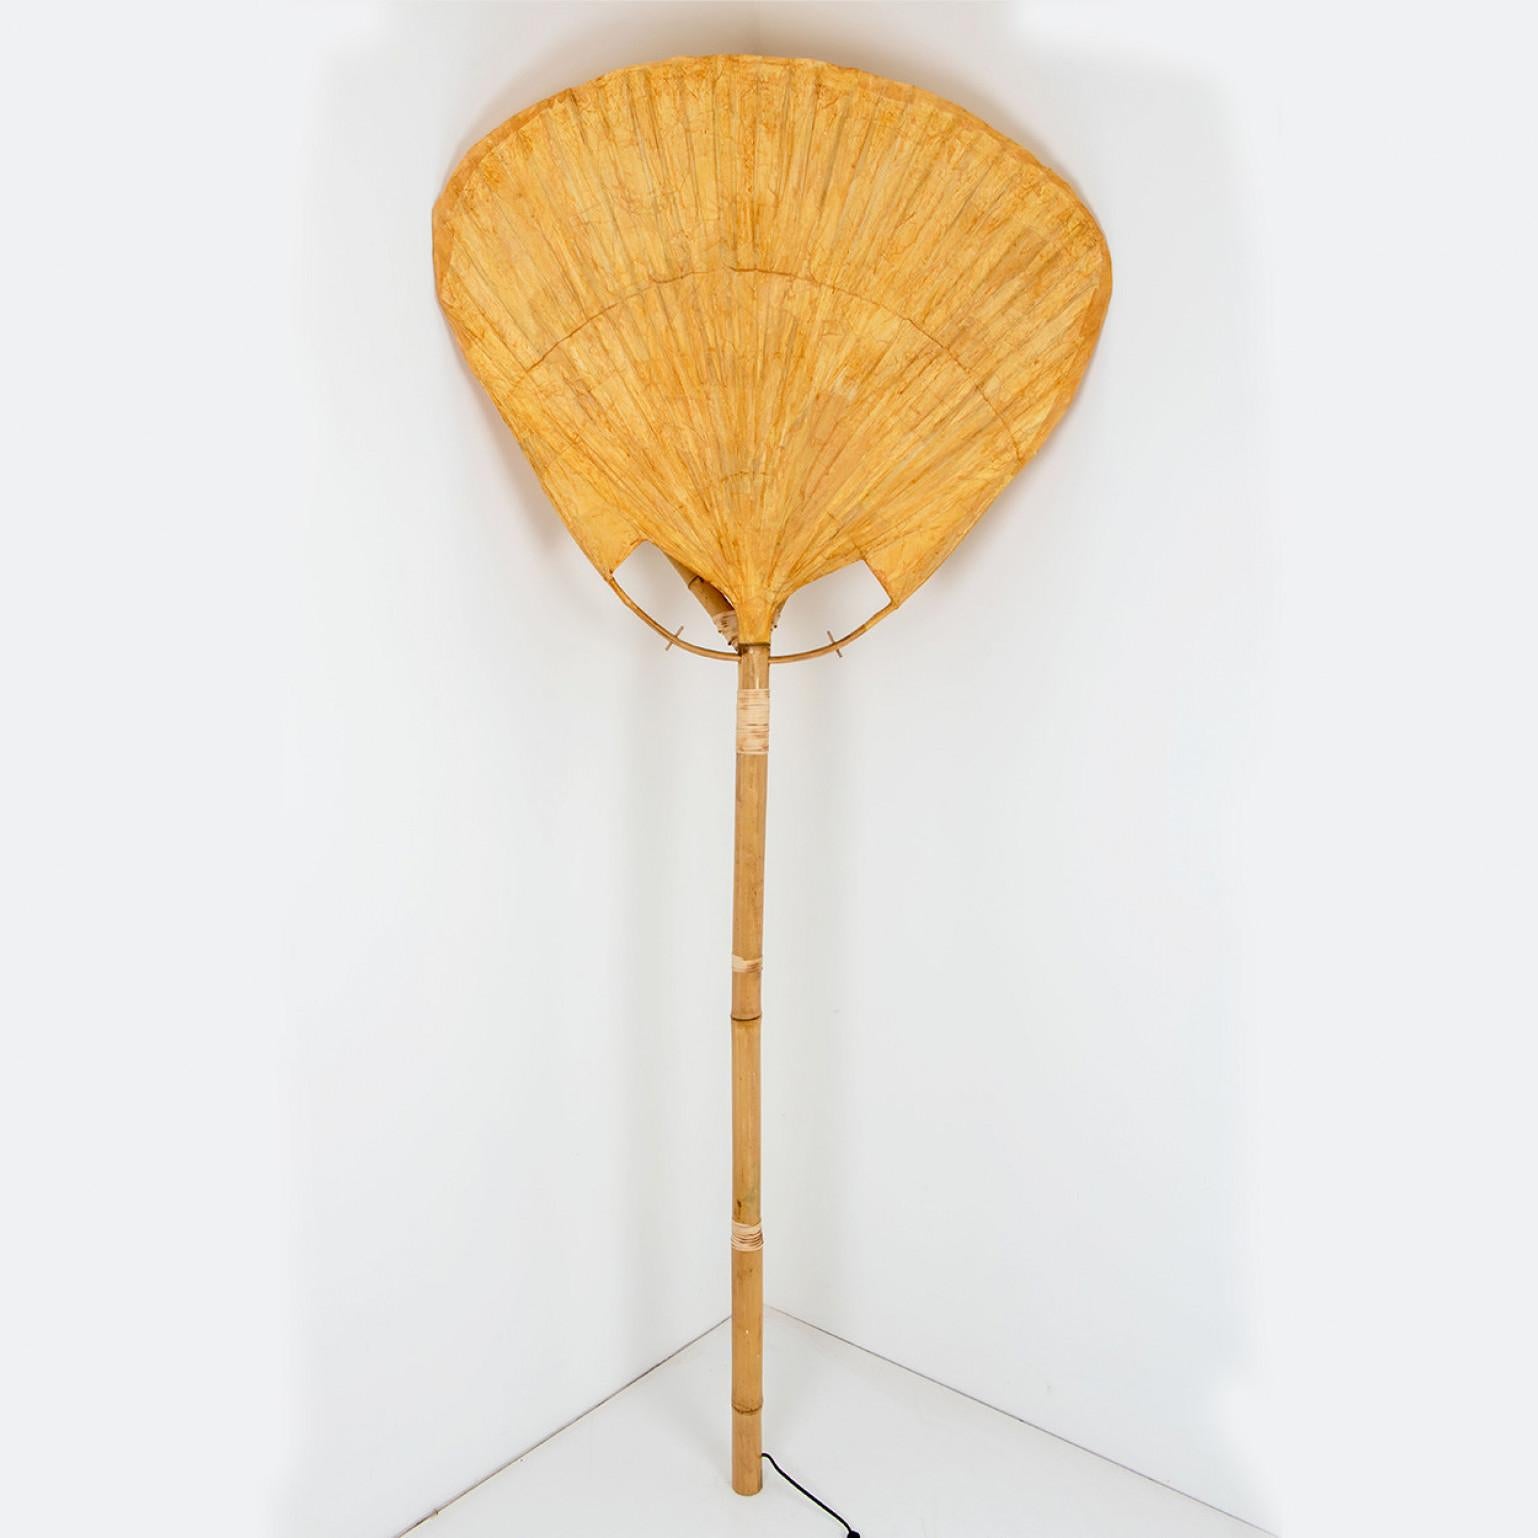 Steel Floor Lamp “Uchiwa” by Ingo Maurer for Design M Germany, 1977 For Sale